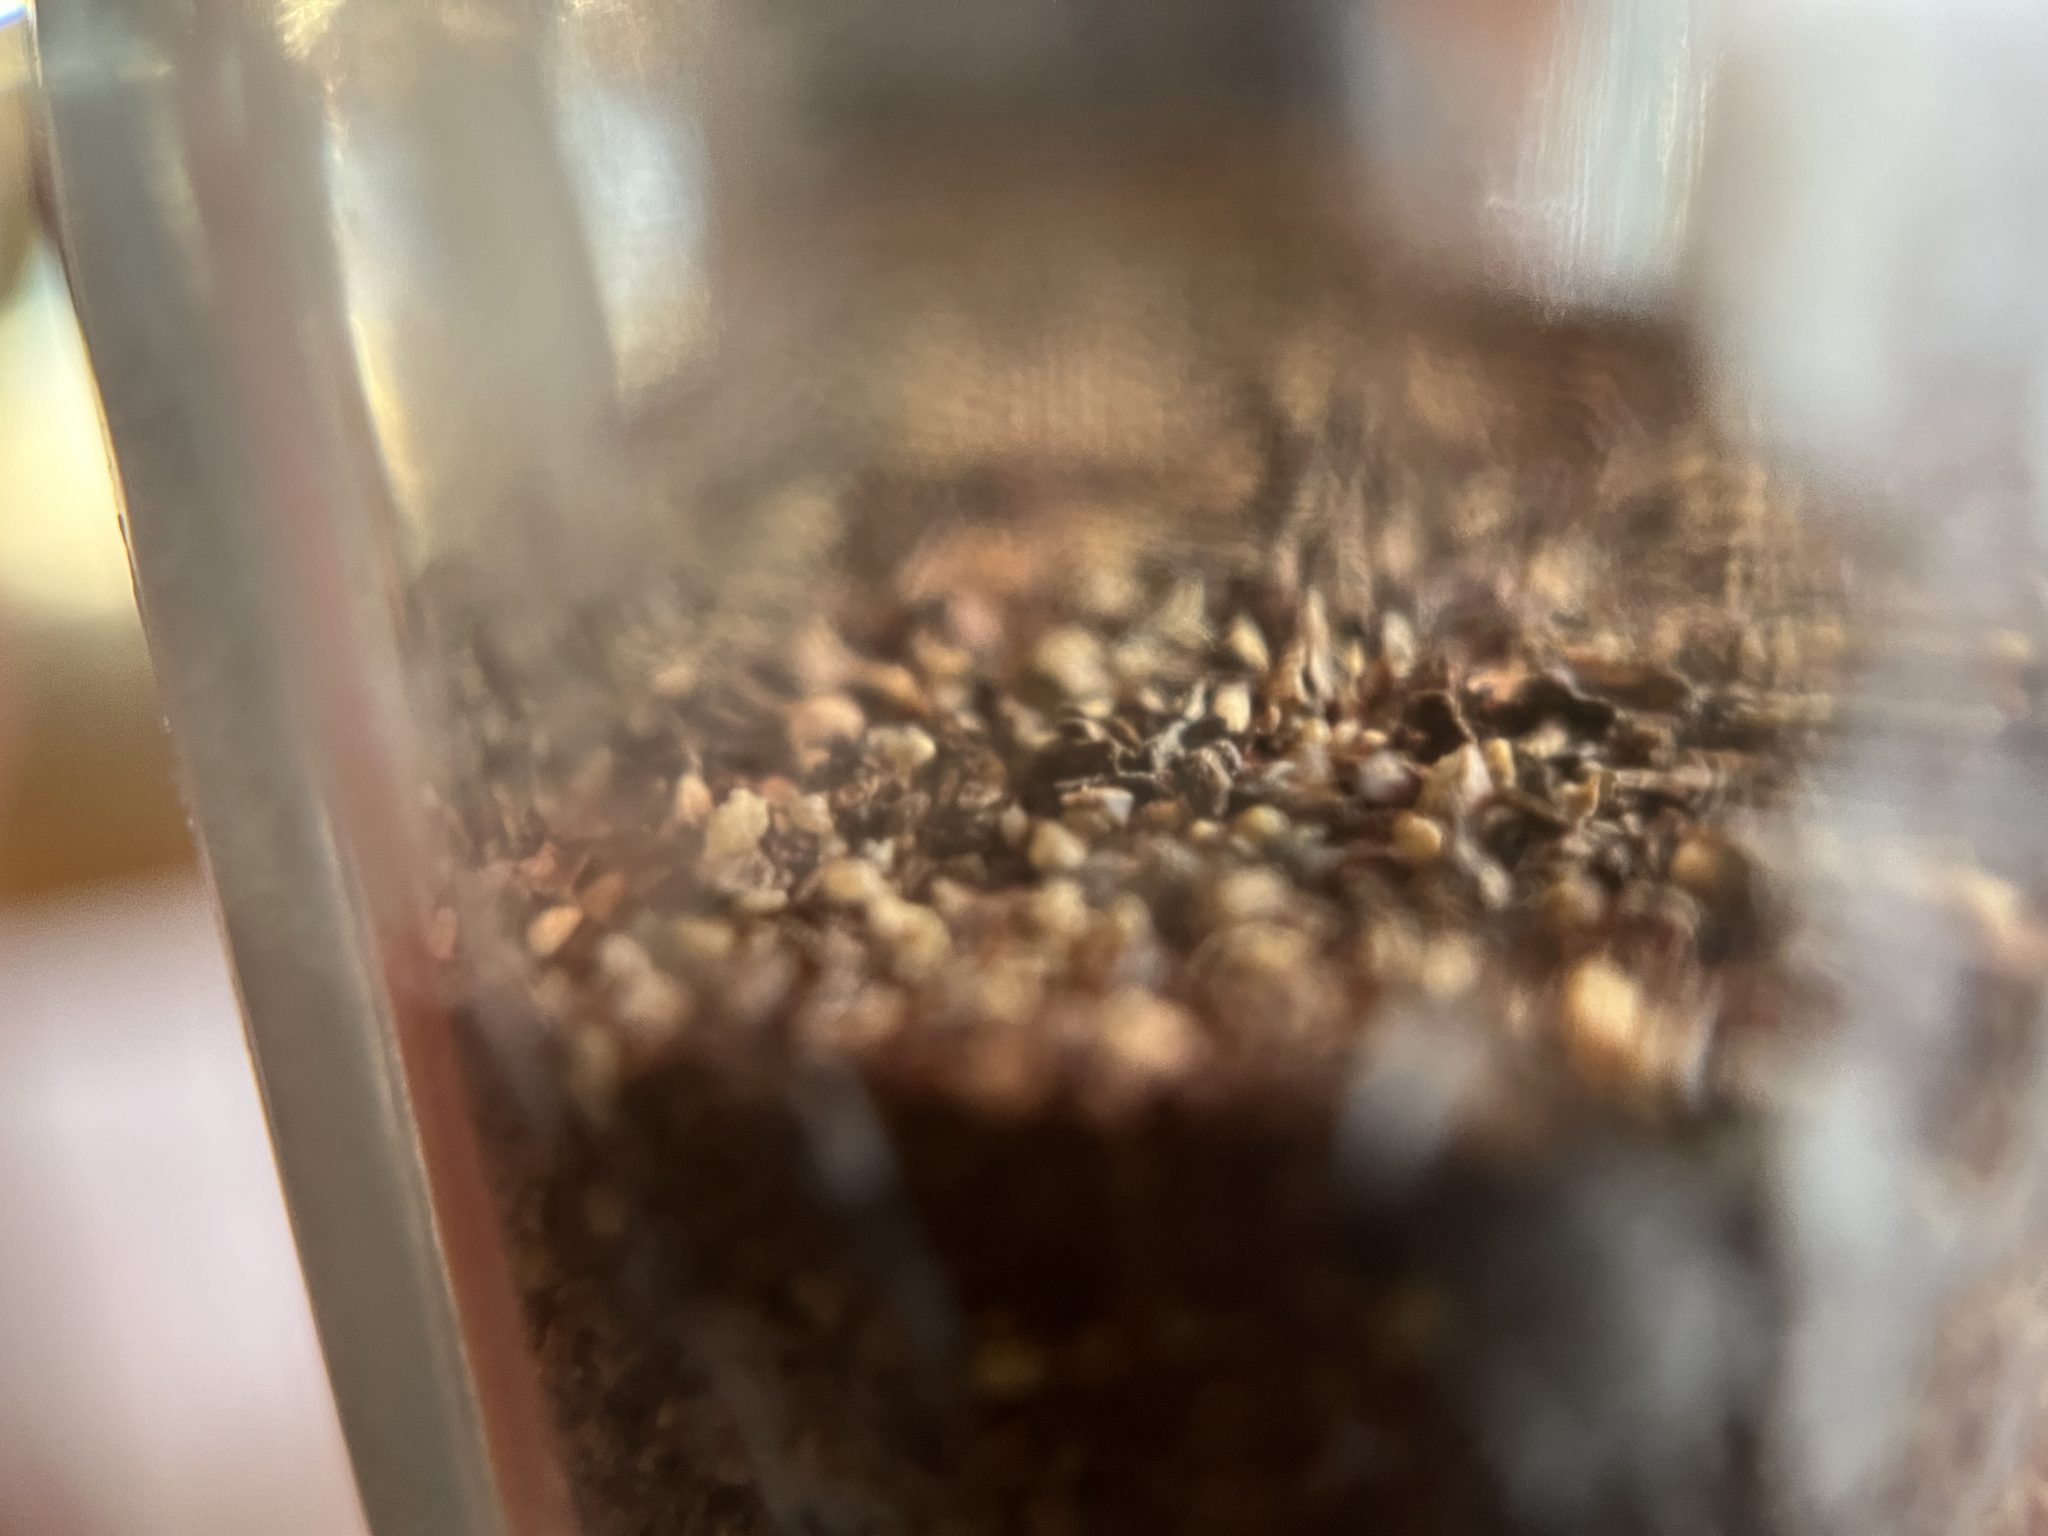 Black pepper close up through the glass of a shaker